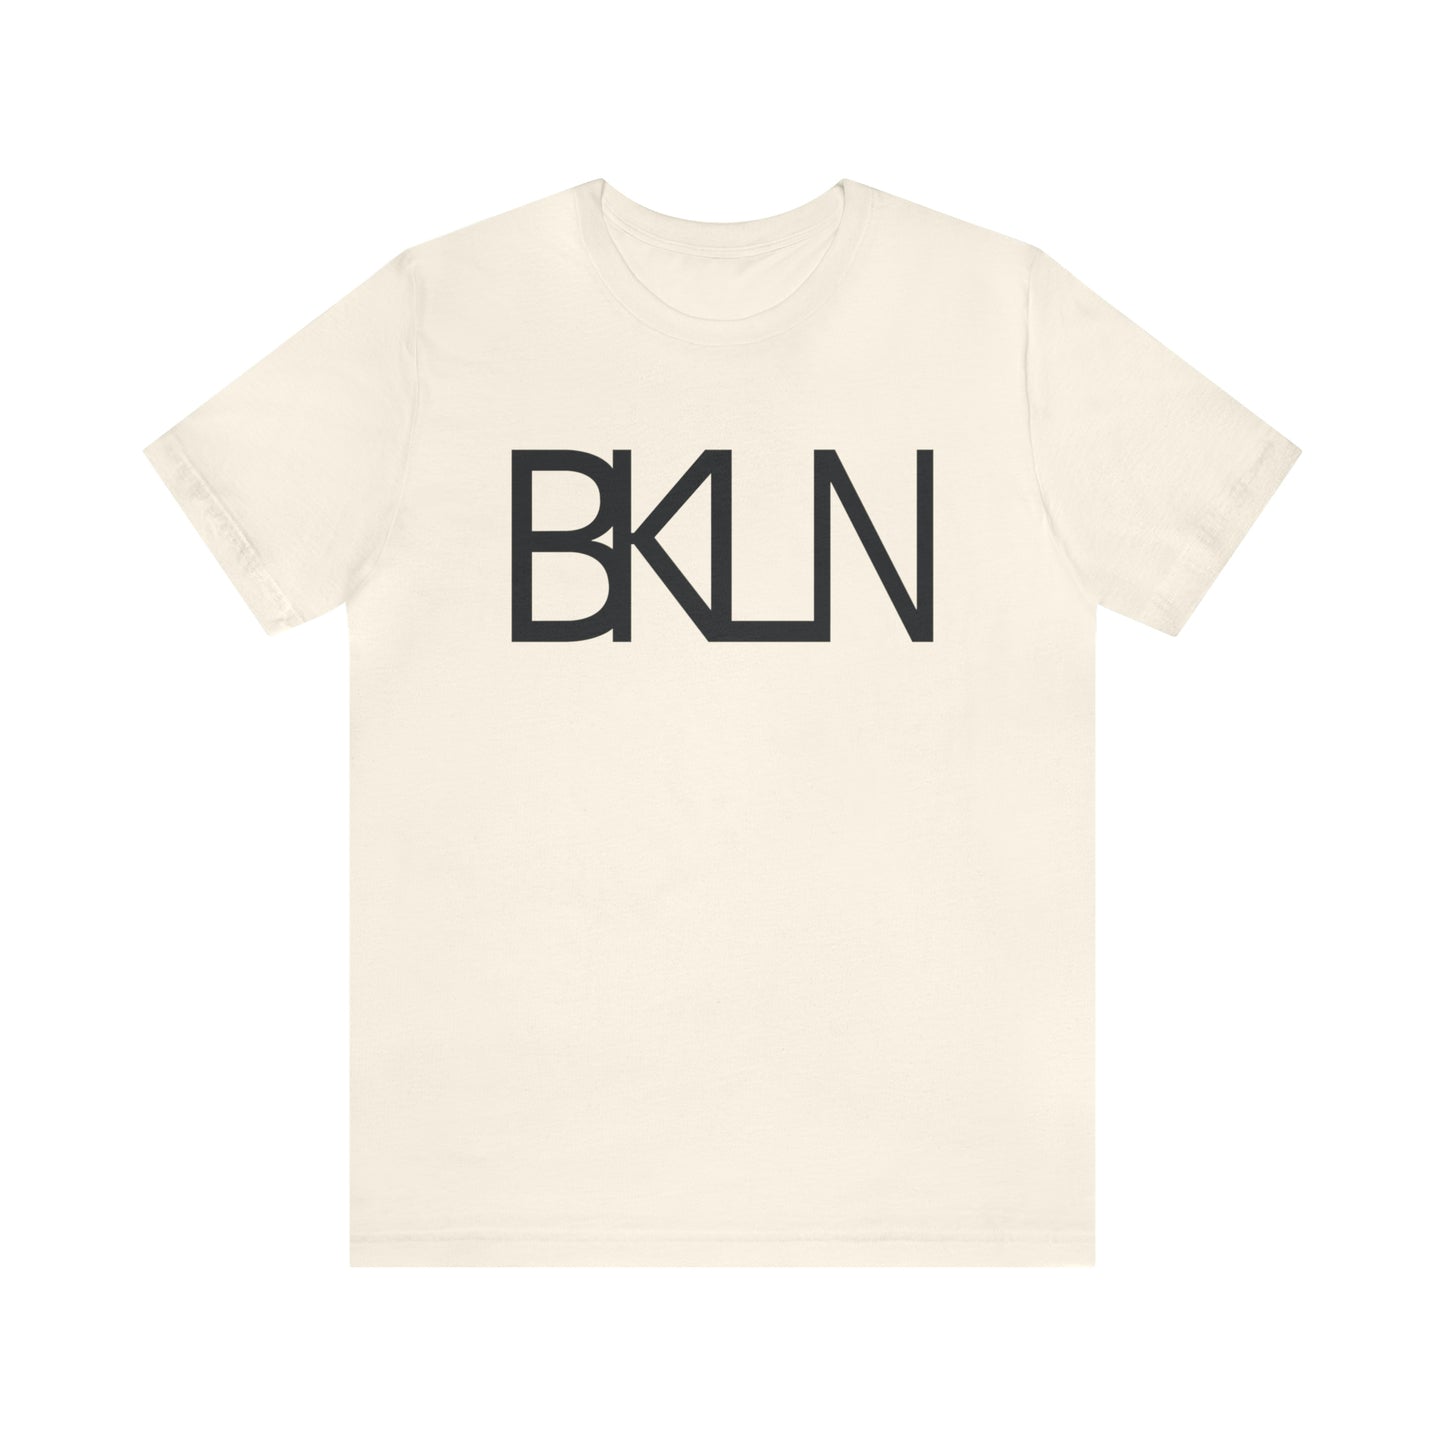 BKLN - Unisex T-Shirt